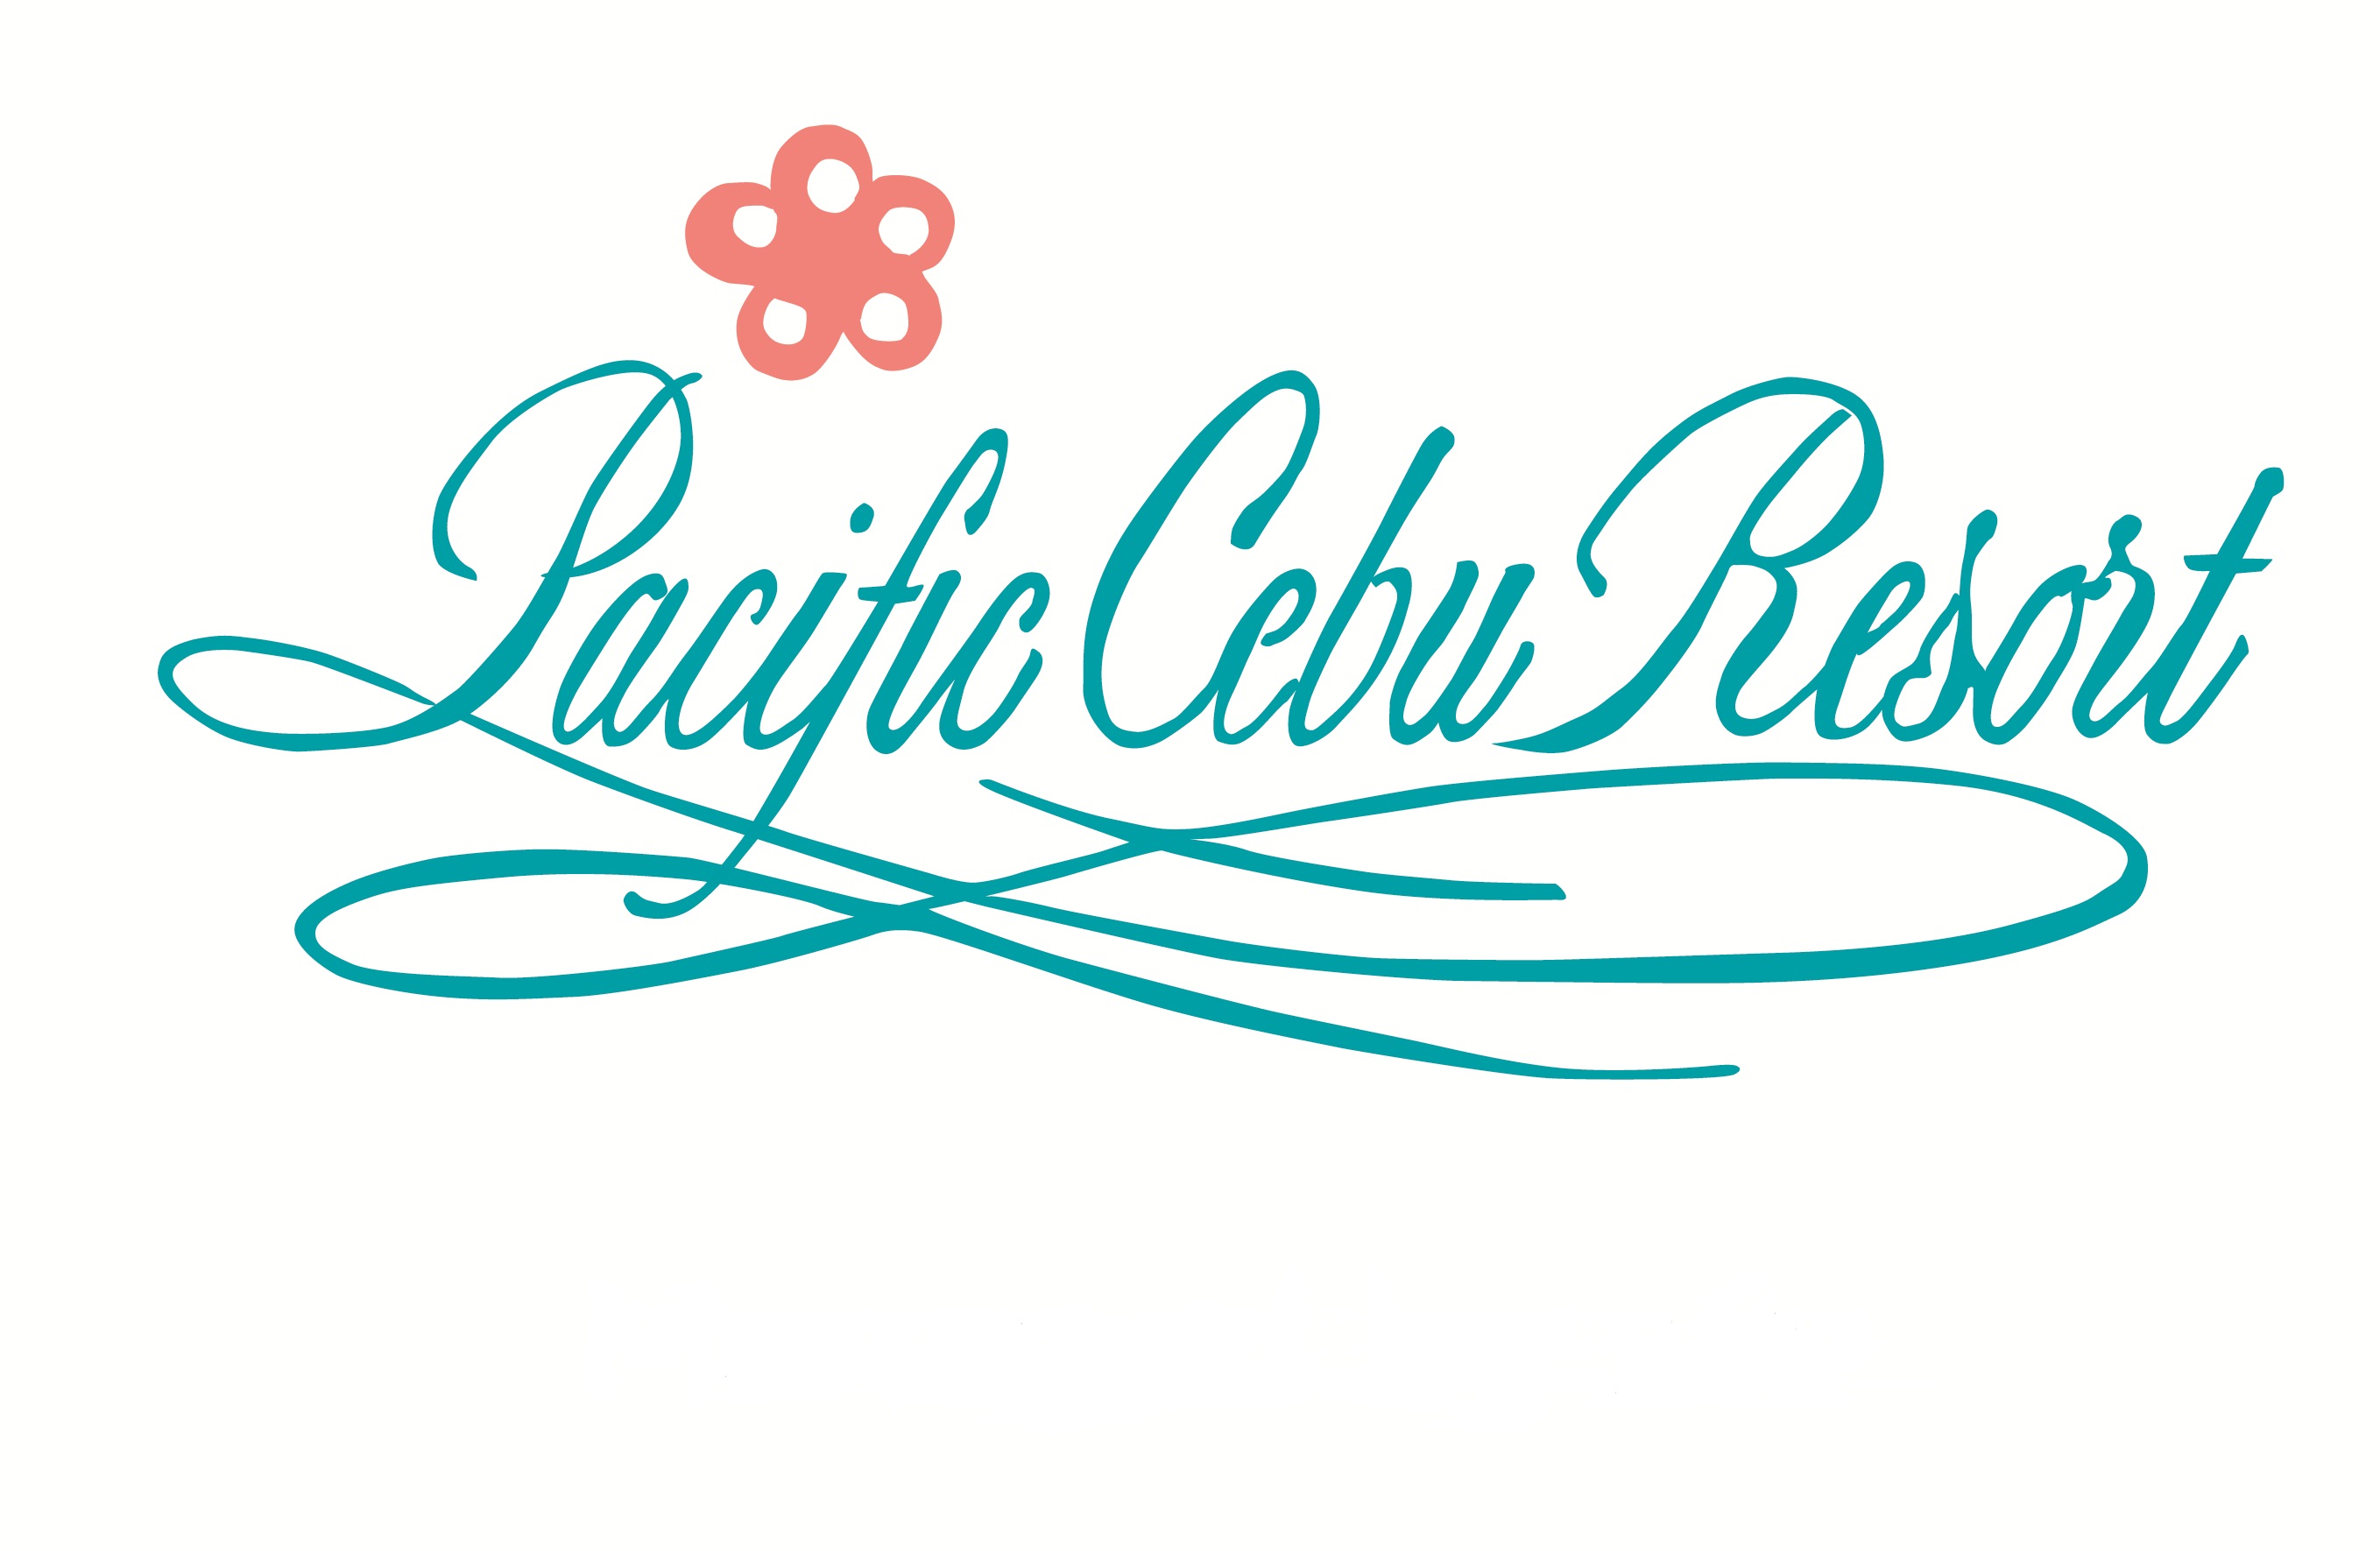 Job hiring at Pacific Cebu Resort, Job vacancy in Pacific Cebu Resort